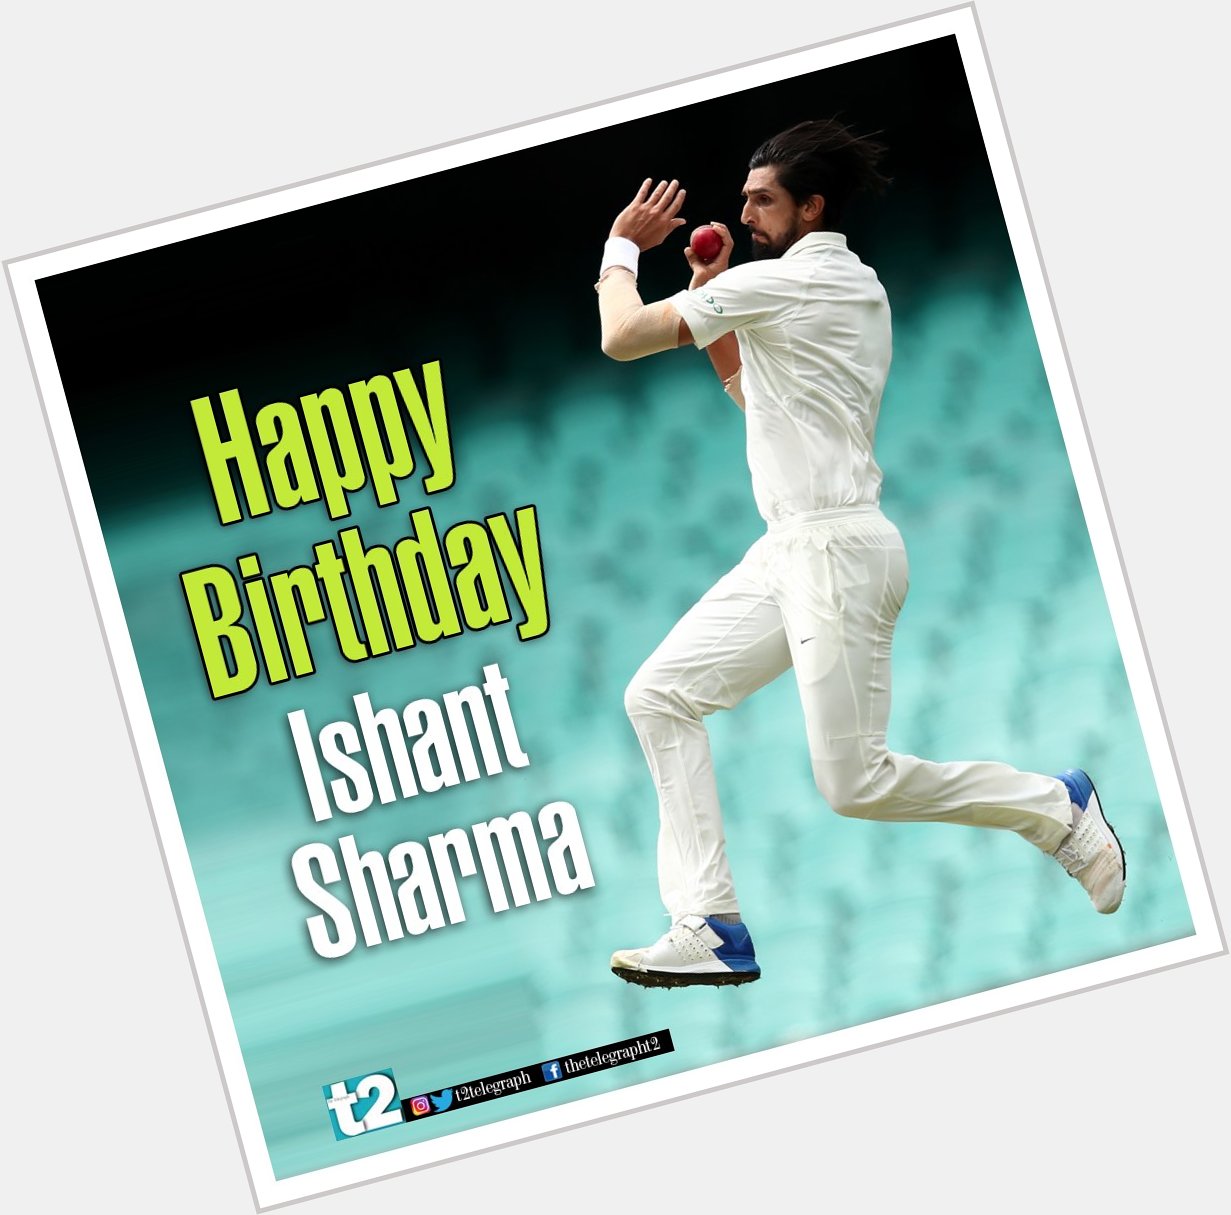 Here s wishing pace battery Ishant Sharma a very happy birthday! 